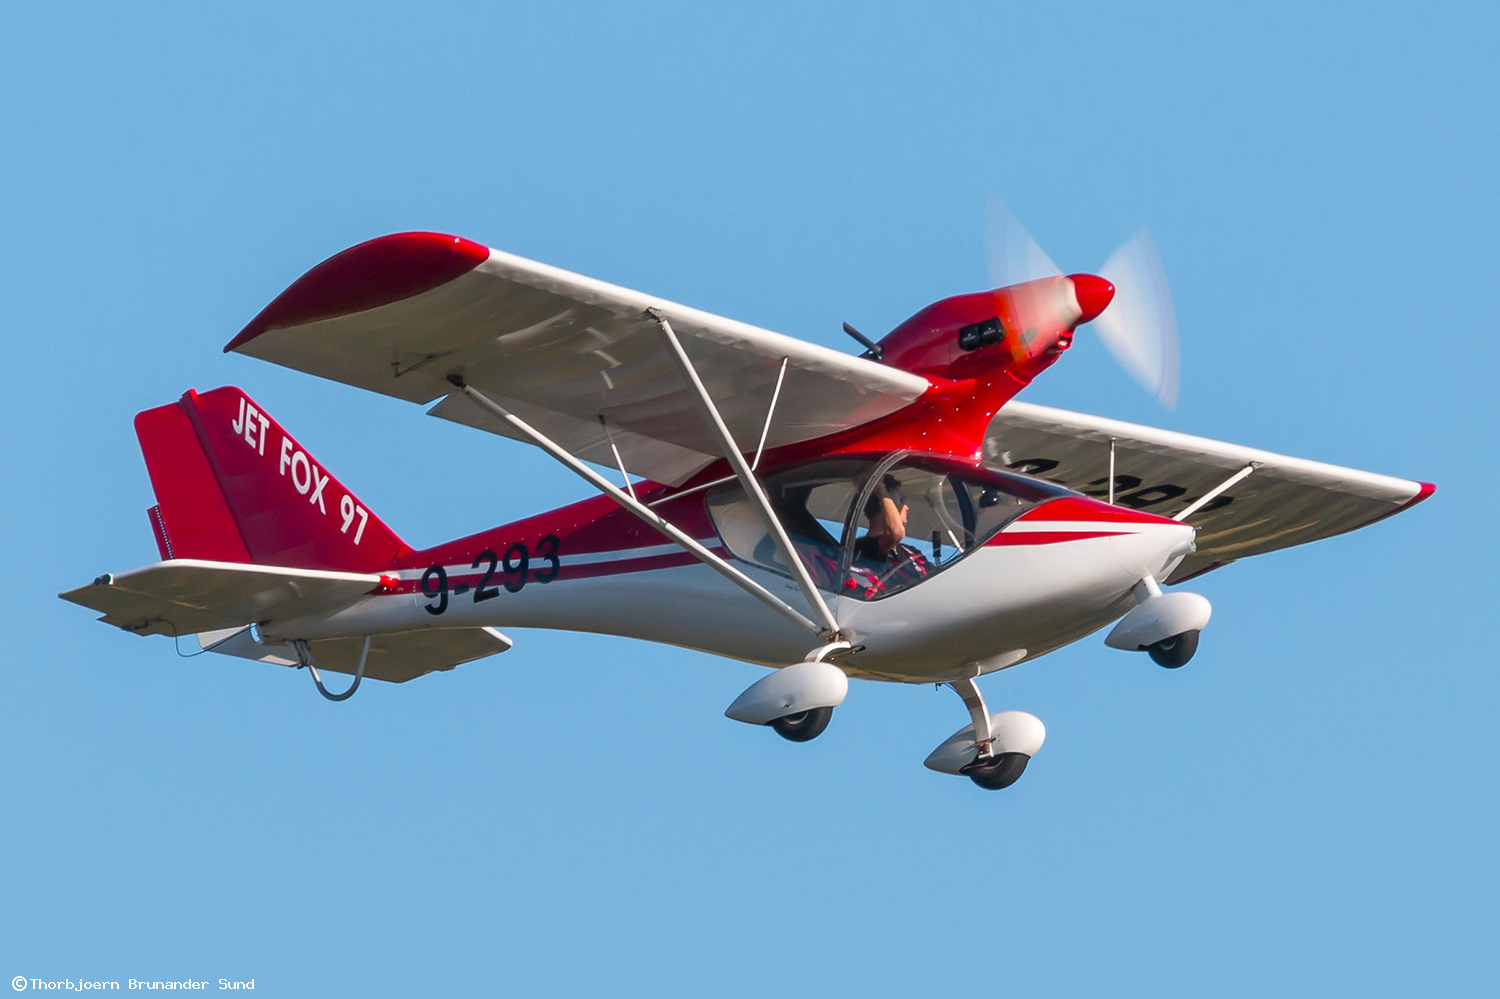 Air foxes. Джет Фокс. Jet Fox v6 самолет. Самолёт Jetfox 2020. Fox Moth самолет.